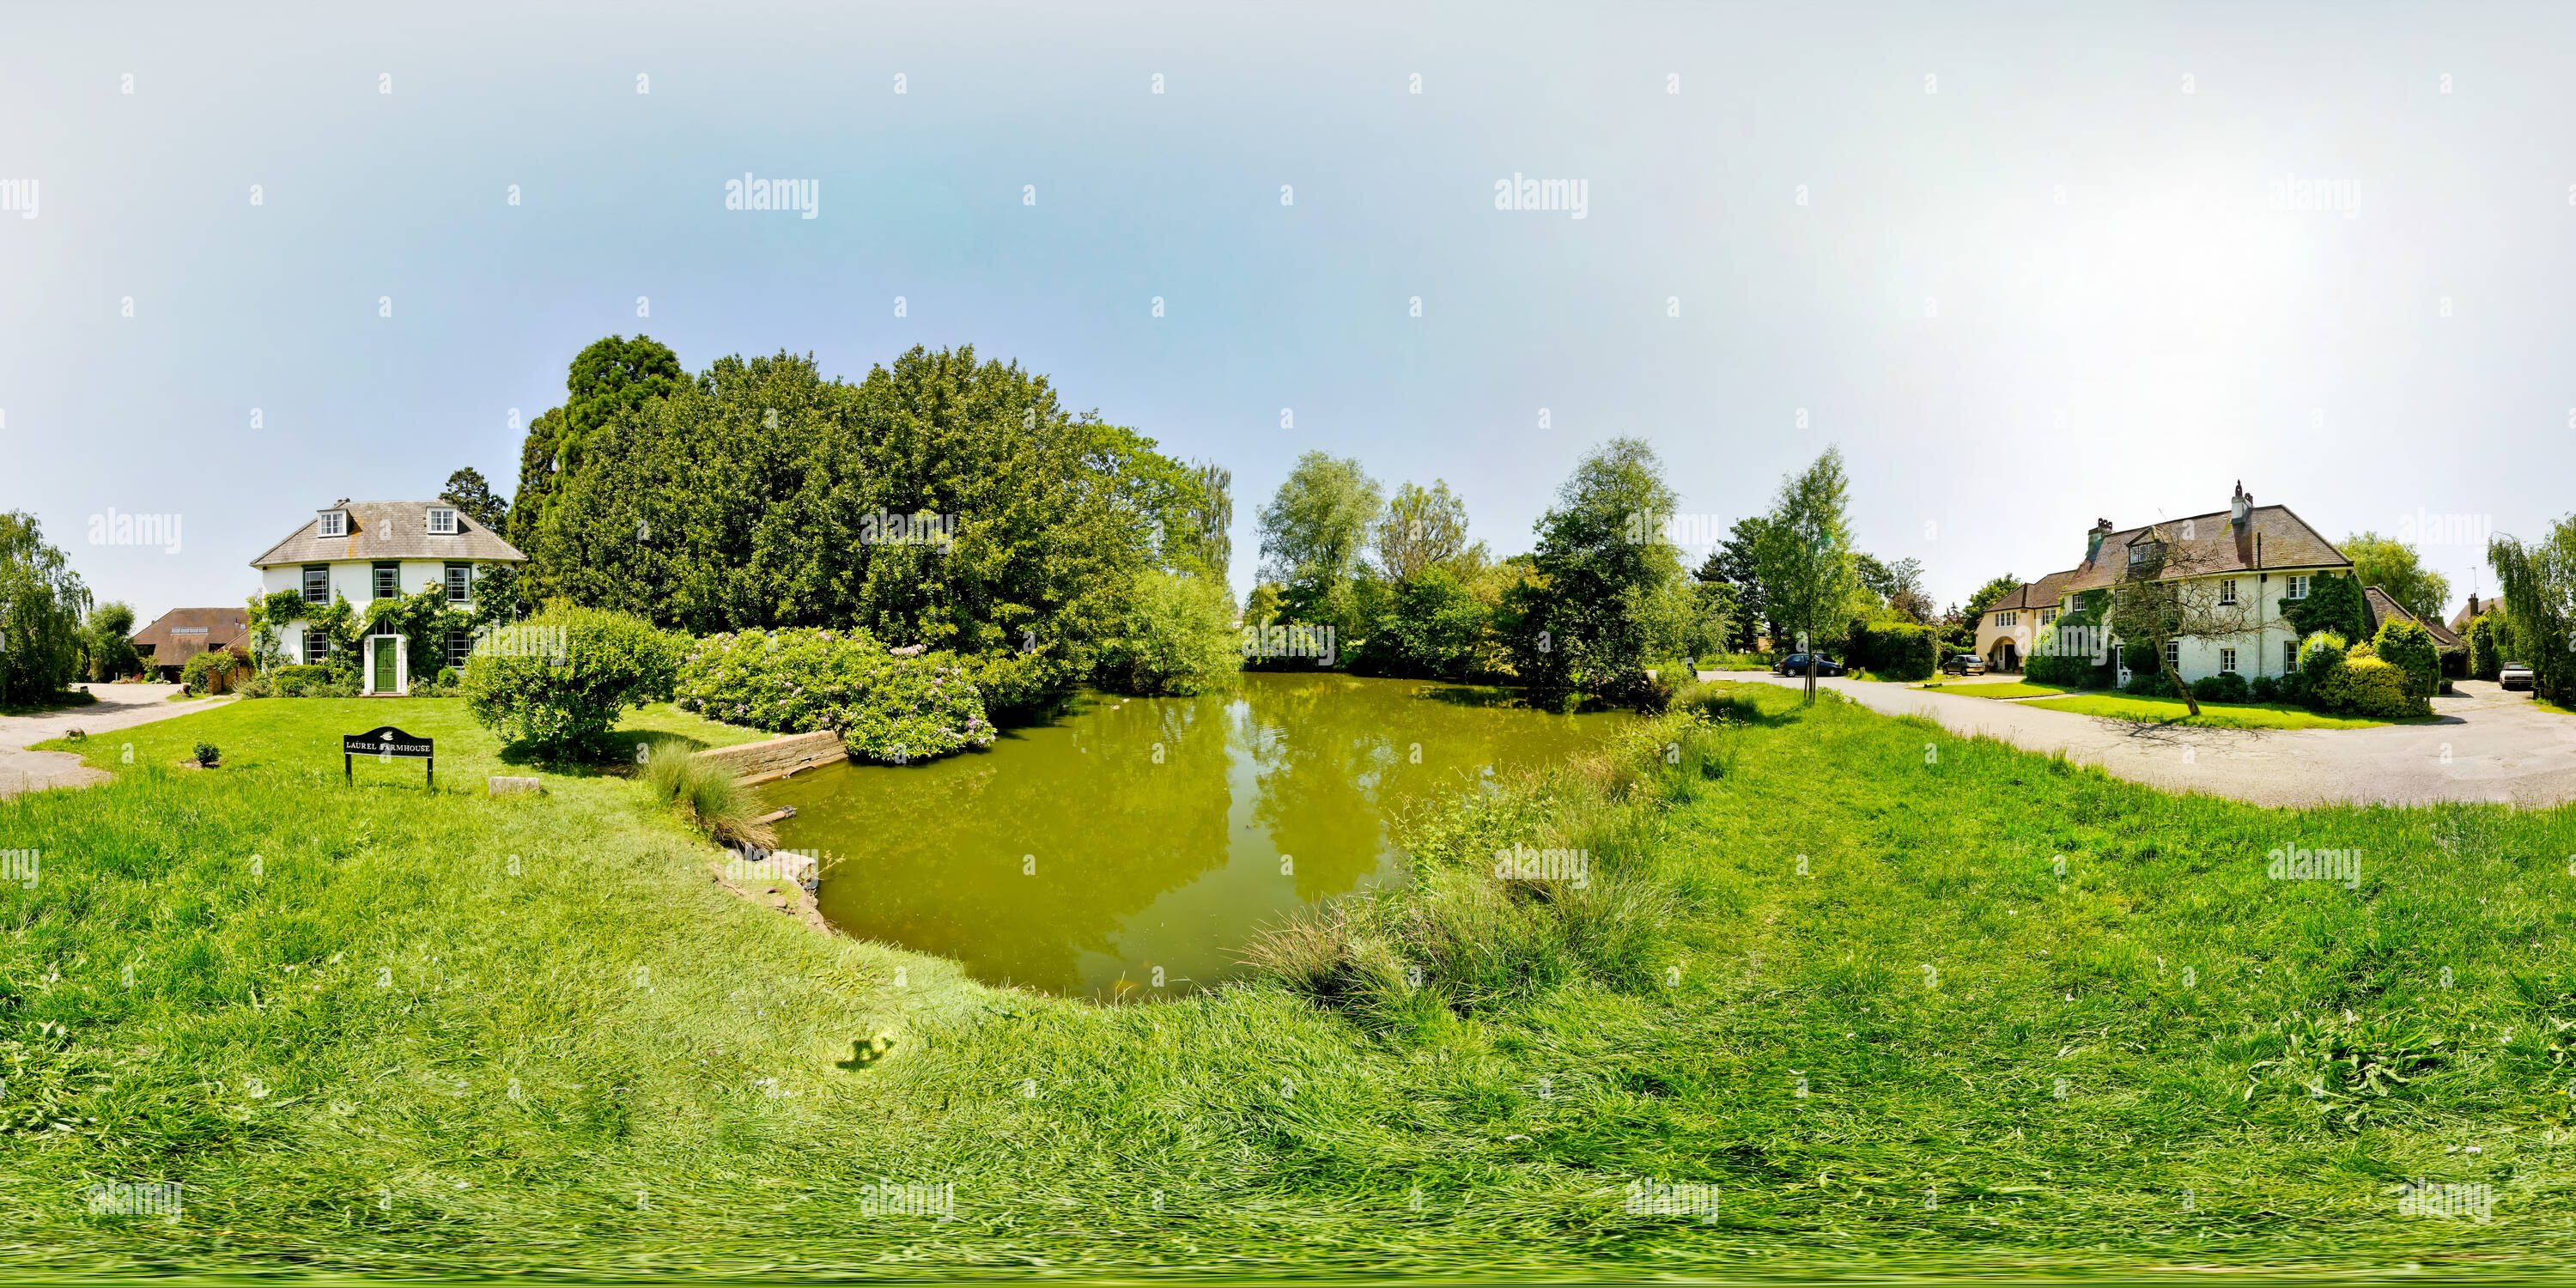 360 degree panoramic view of Totteridge Green Pond